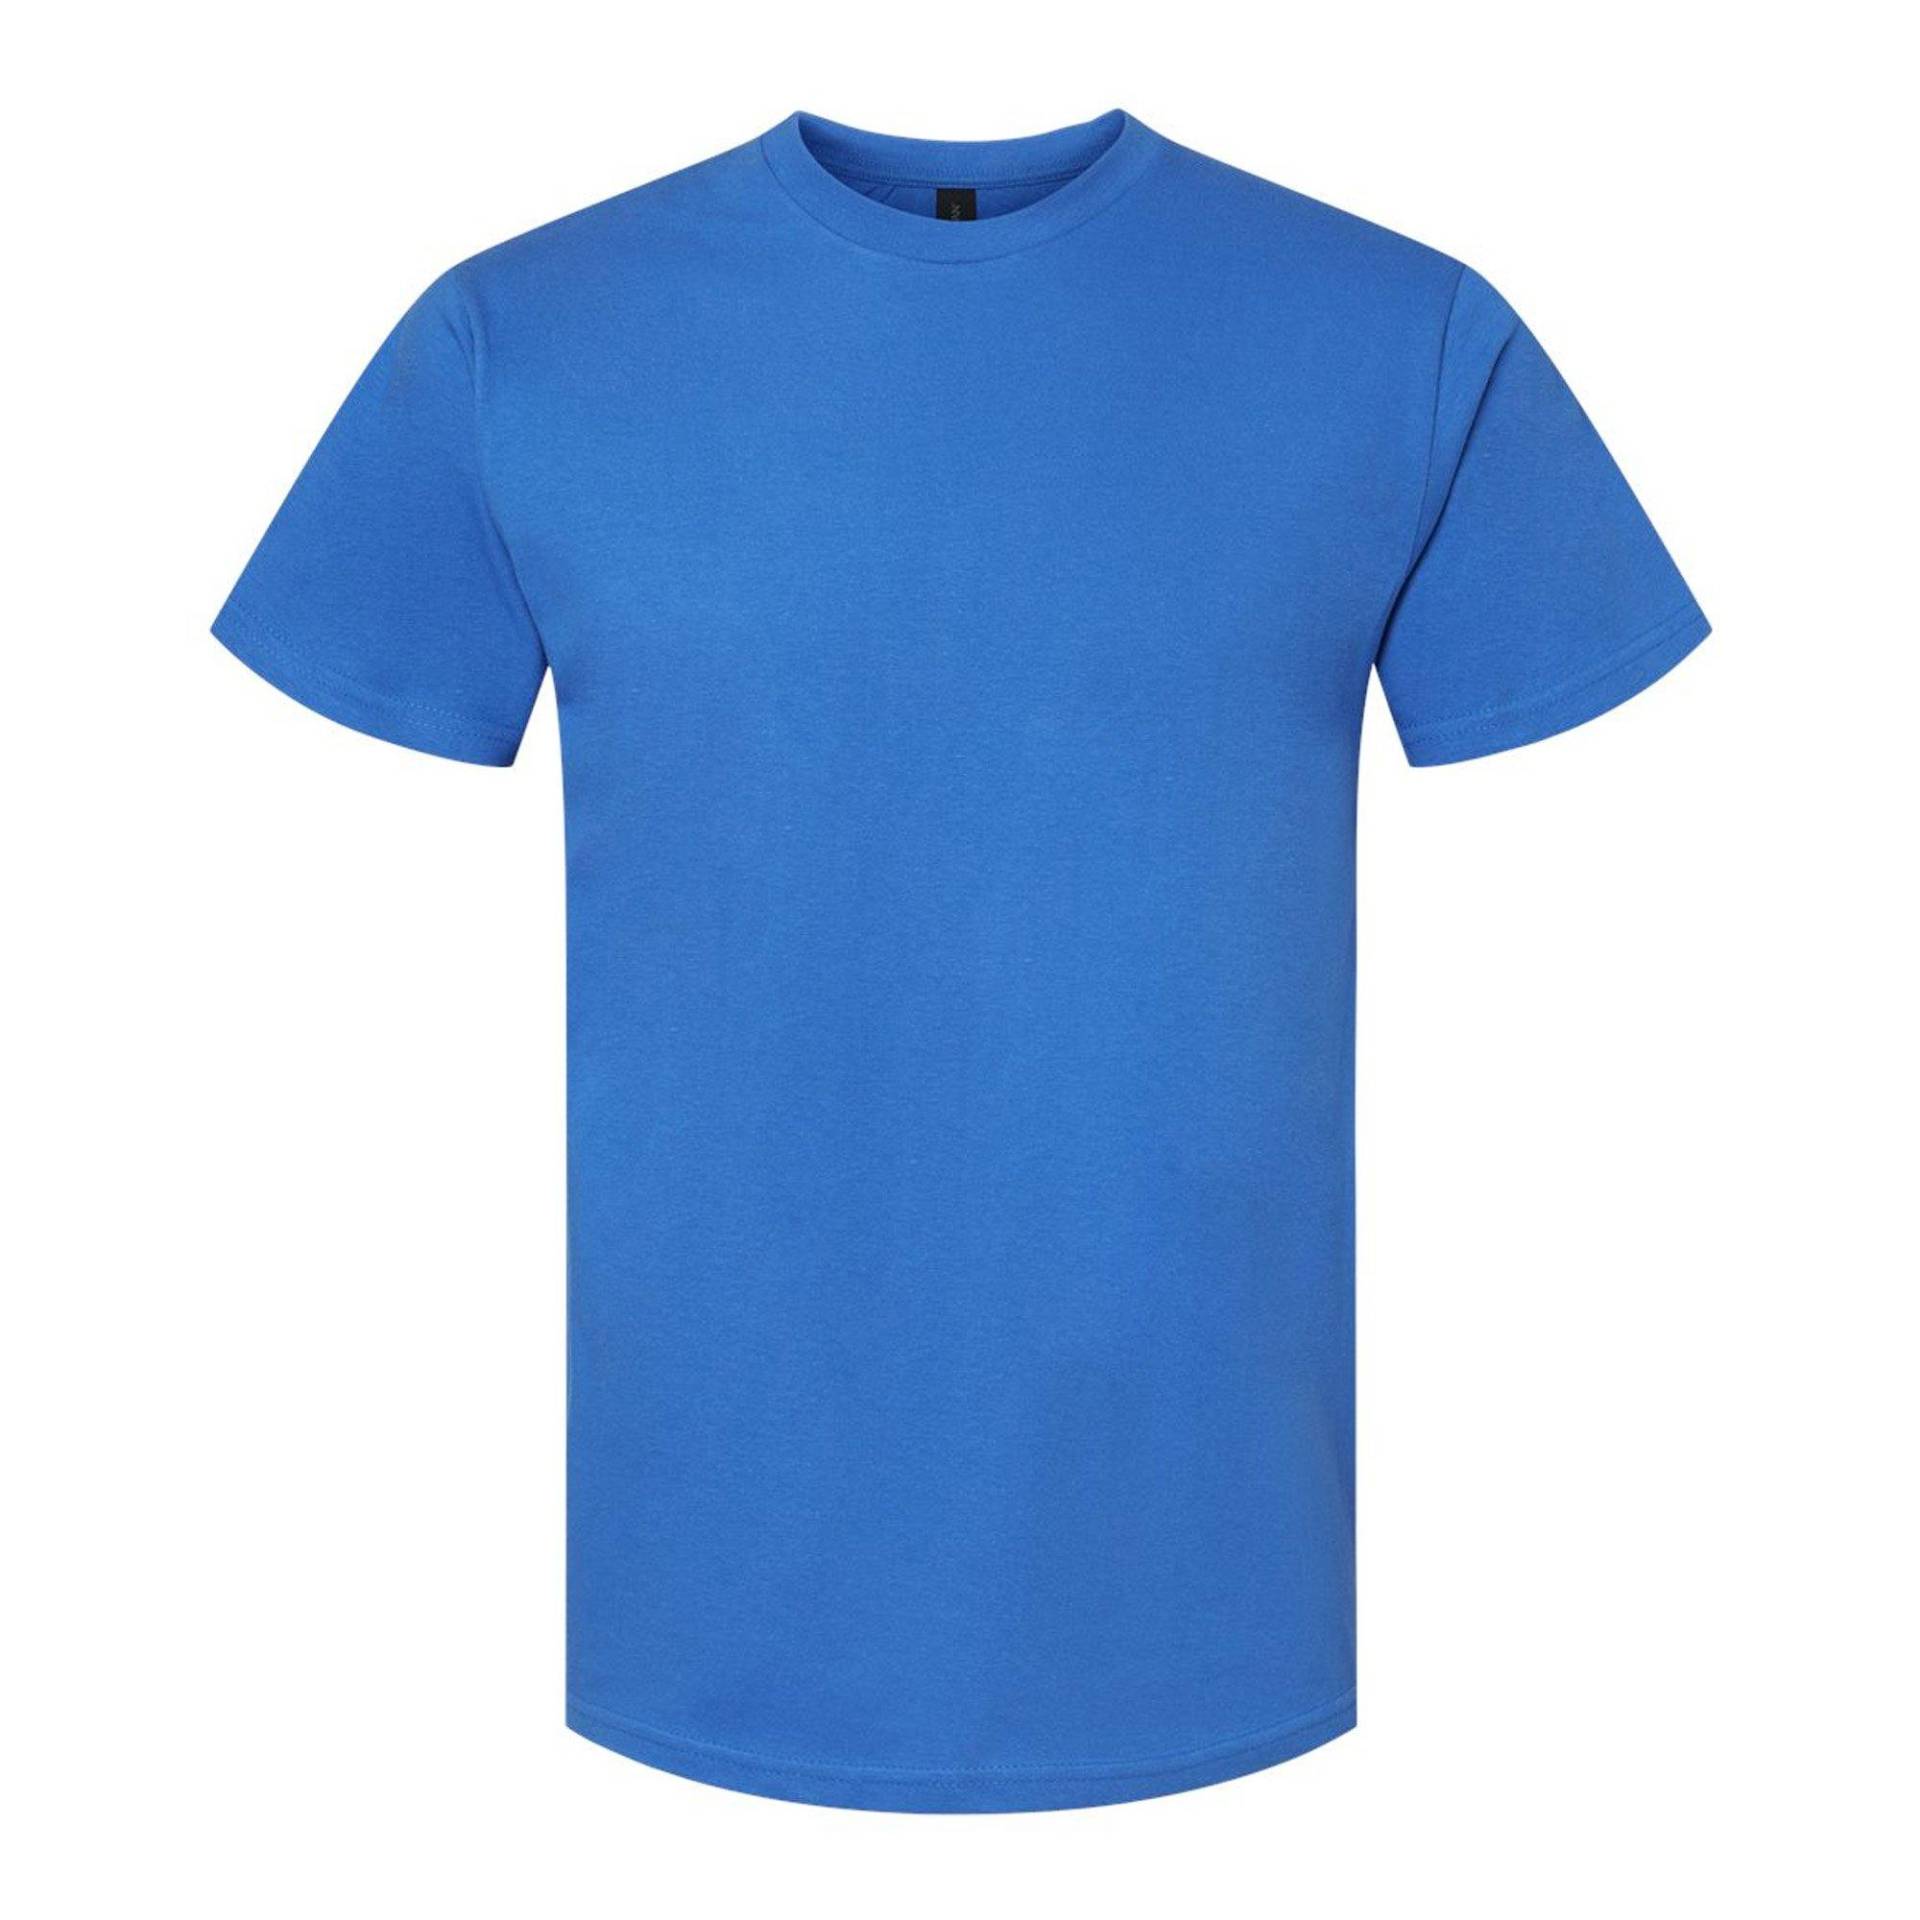 Softstyle Tshirt Damen Königsblau M von Gildan